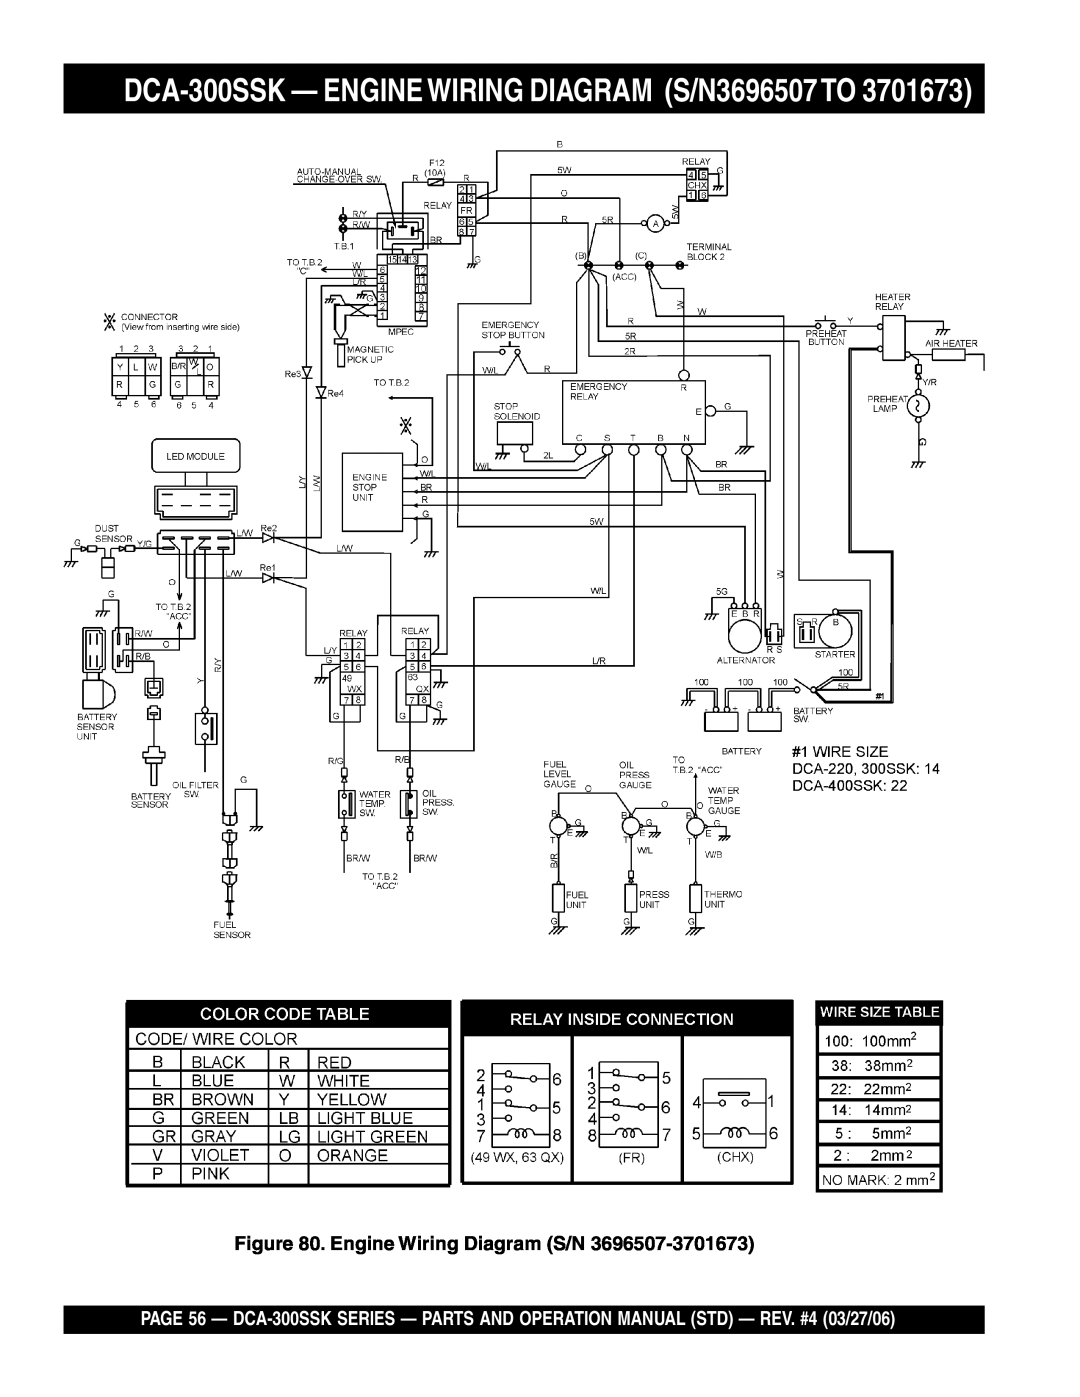 Multiquip manual DCA-300SSK - ENGINE WIRING DIAGRAM S/N3696507TO, Engine Wiring Diagram S/N 